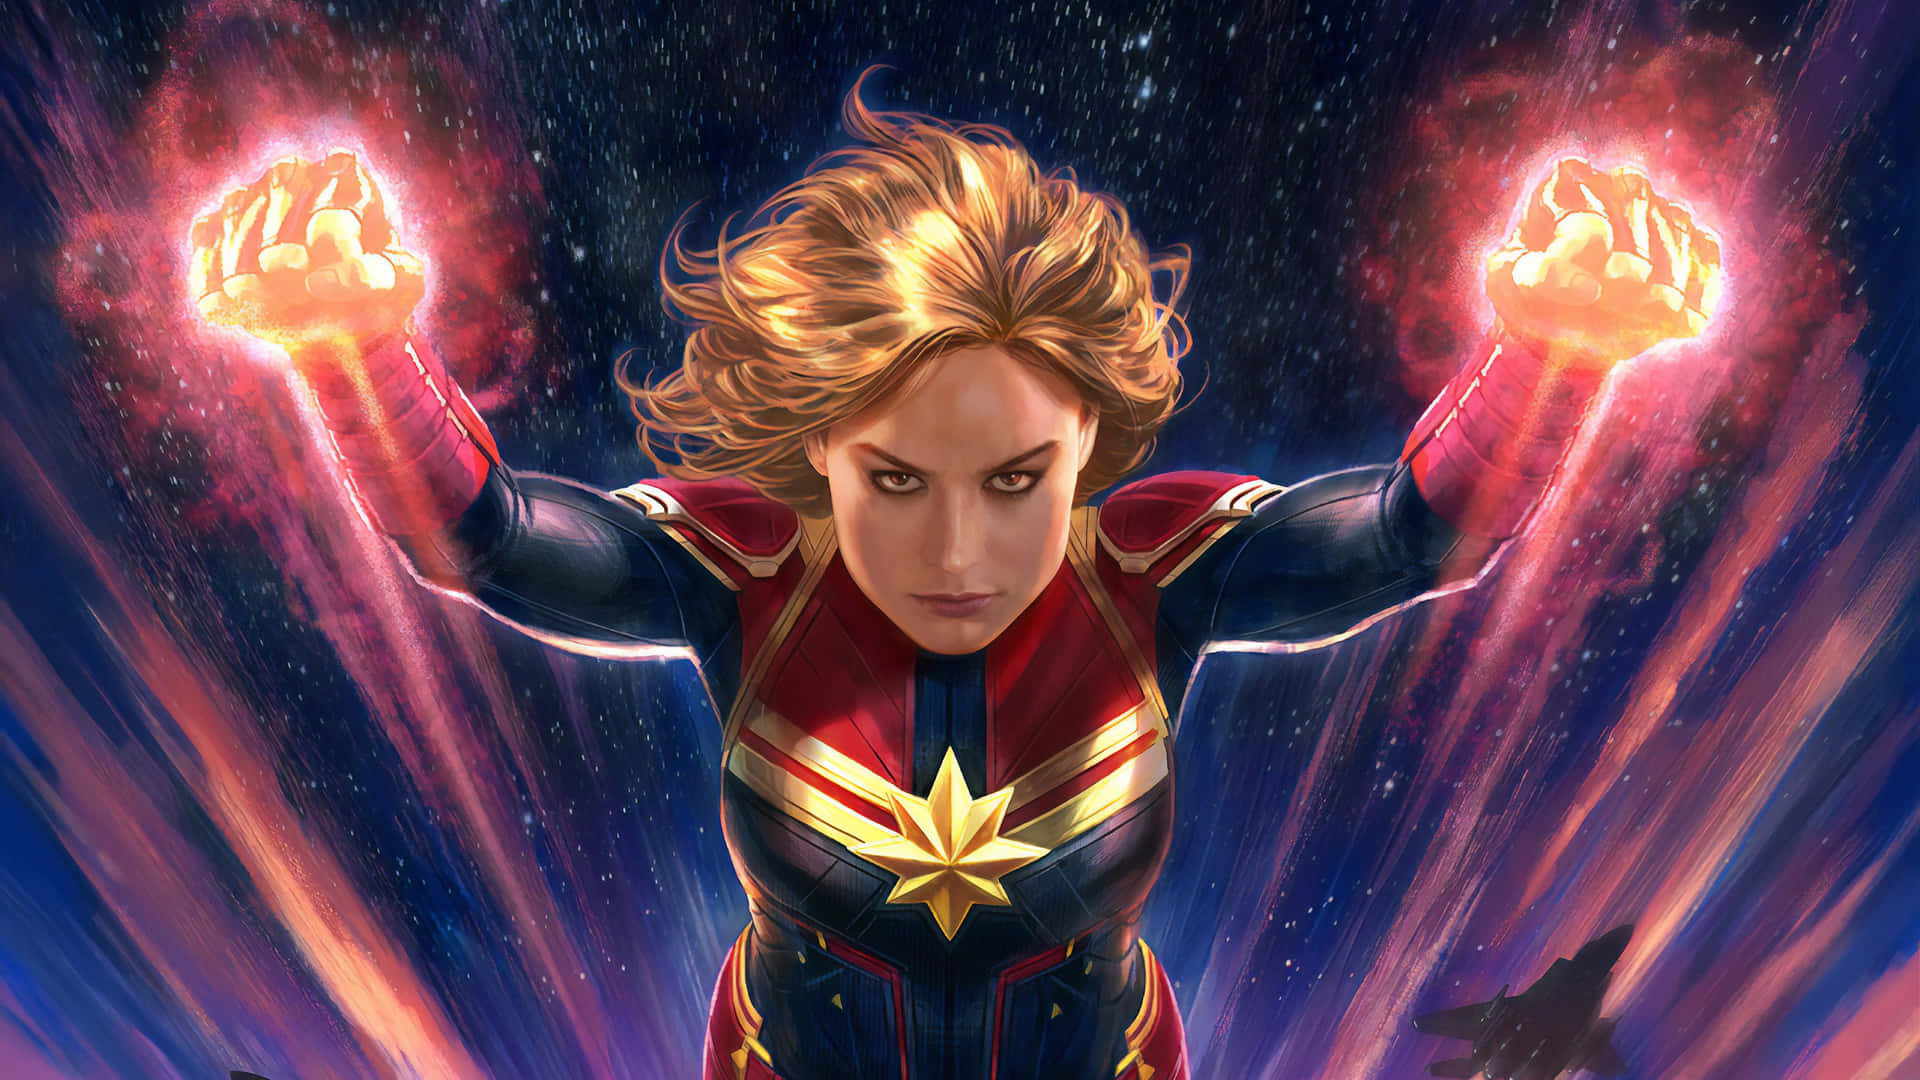 Superhero Captain Marvel in Action Wallpaper